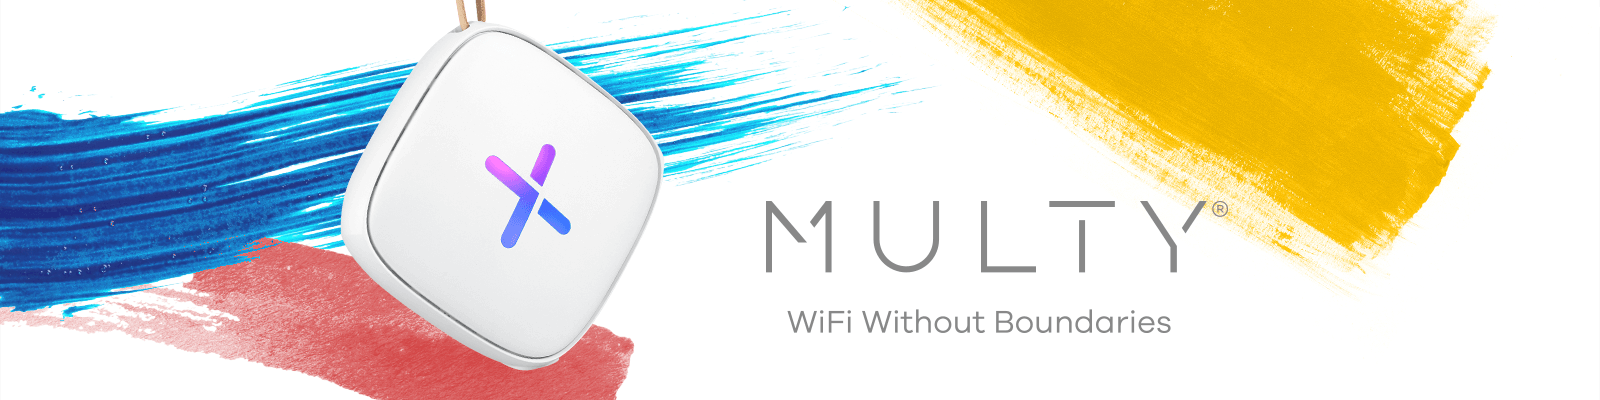 Multy U, WiFi Without Boundaries